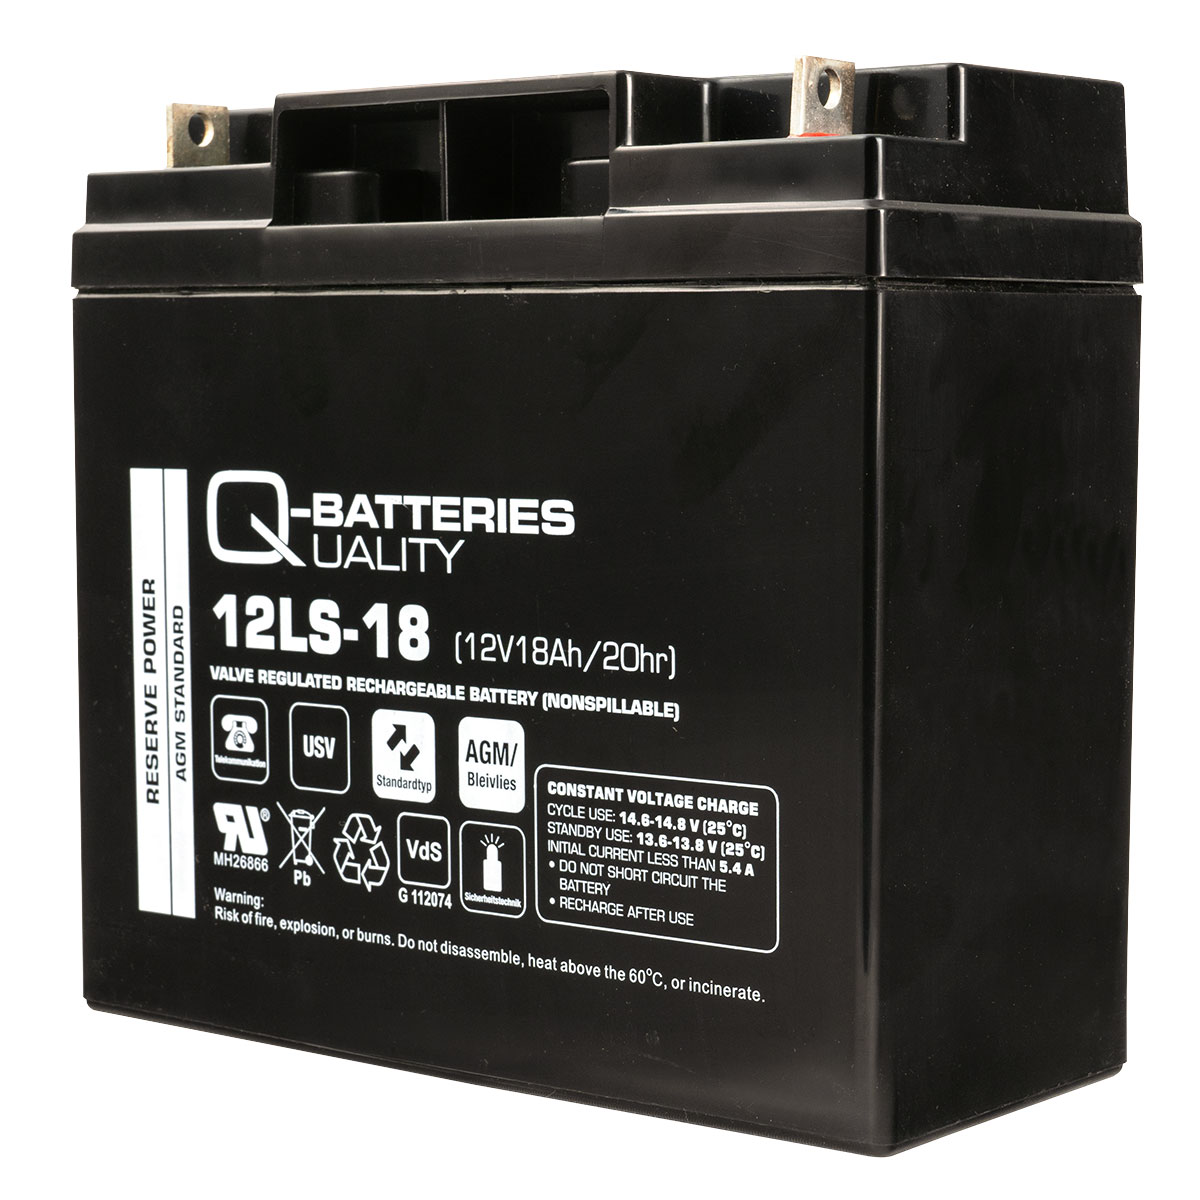 Q-Batteries 12LS-18 12V 18Ah Blei-Vlies-Akku / AGM VRLA mit VdS